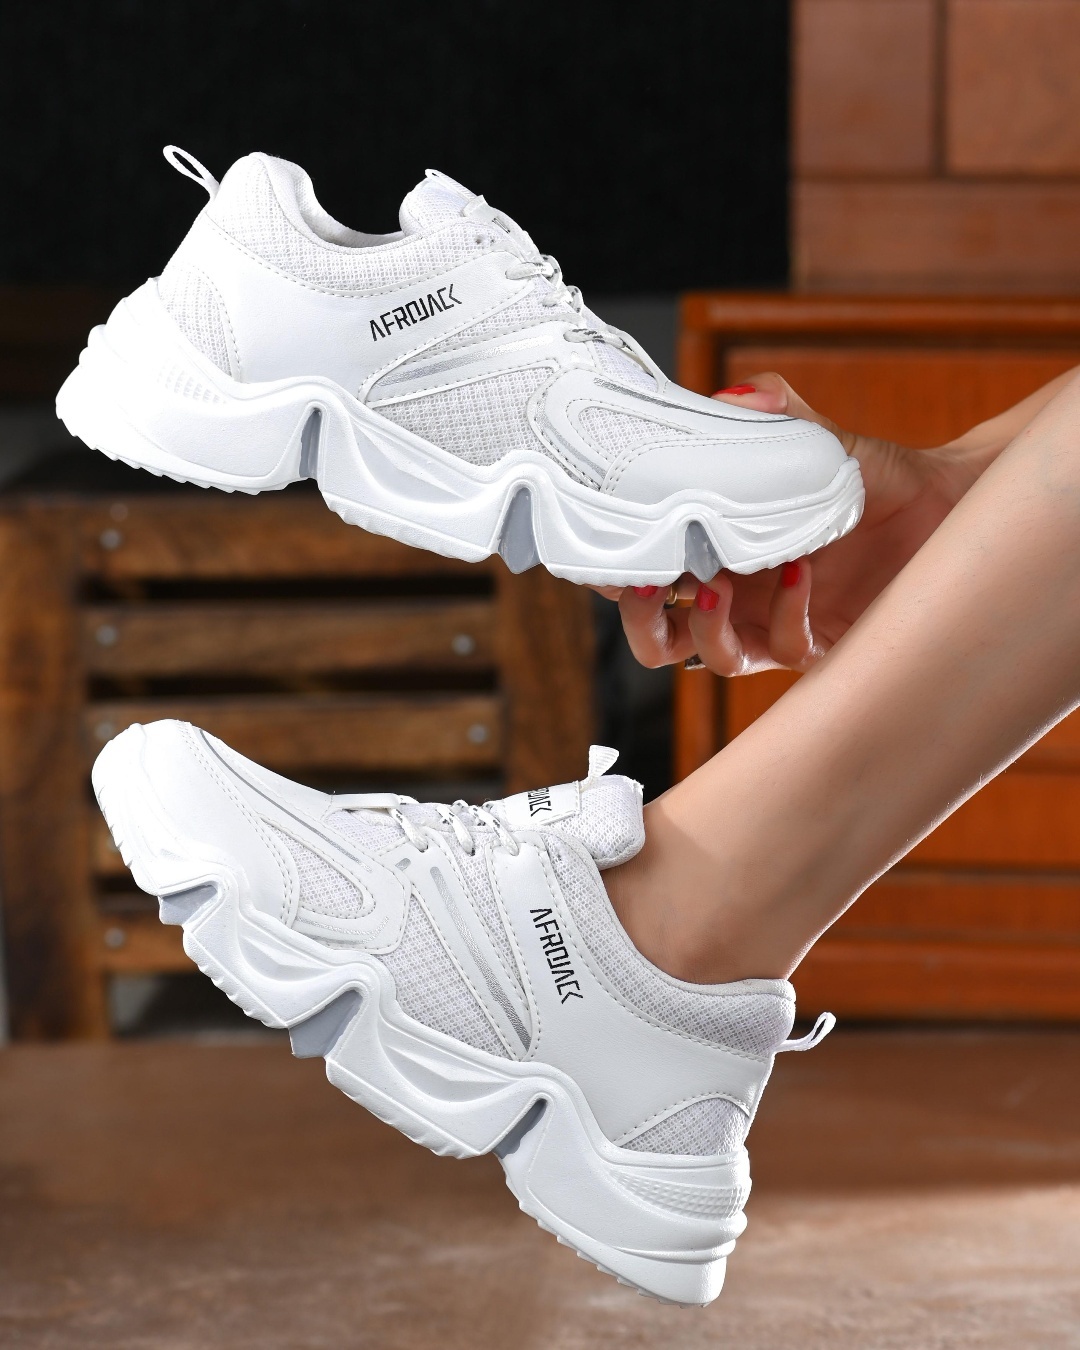 Buy Women's White Sneakers Online in India at Bewakoof